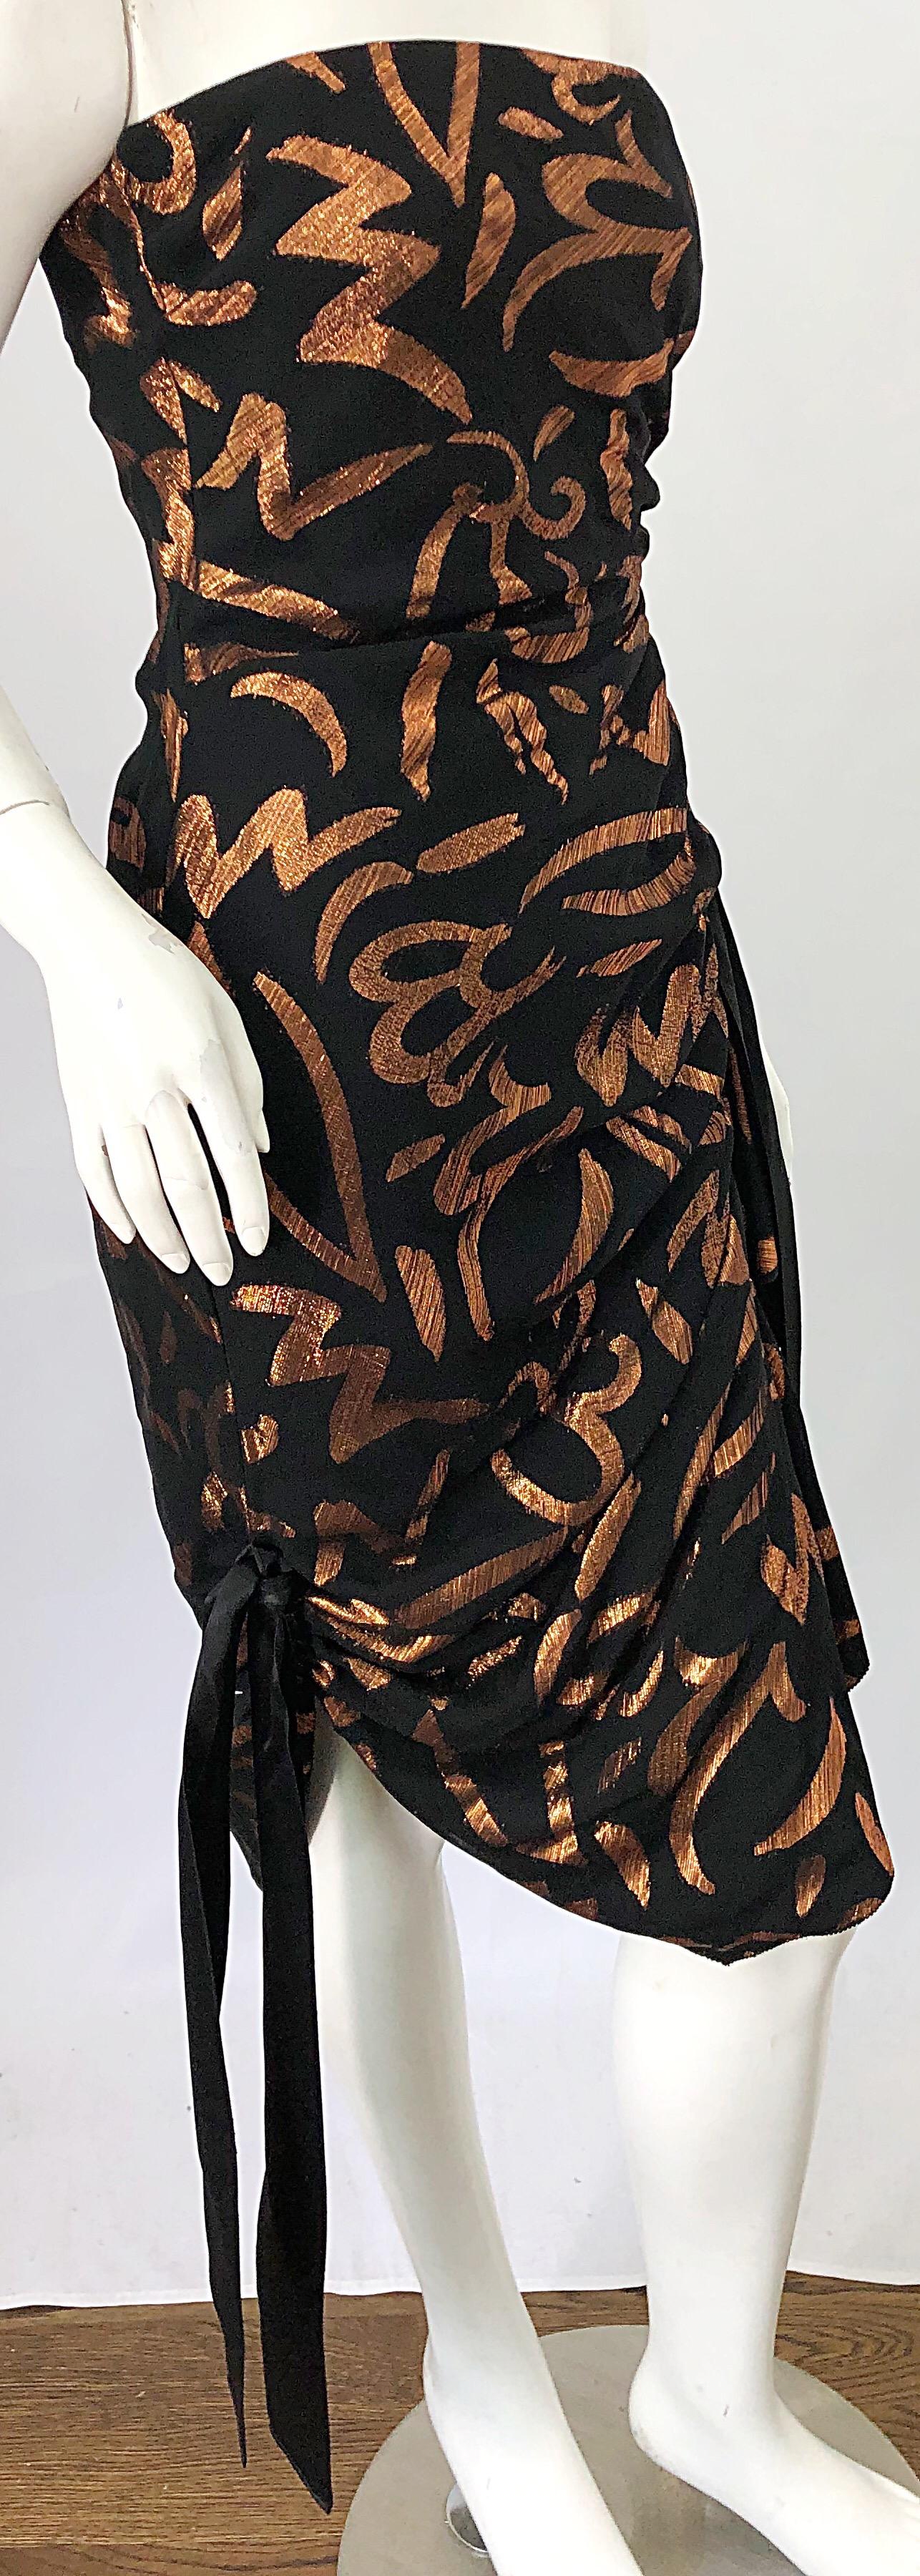 Women's 1980s Tarquin Ebker Black + Bronze Silk Chiffon Batik Print Strapless 80s Dress For Sale